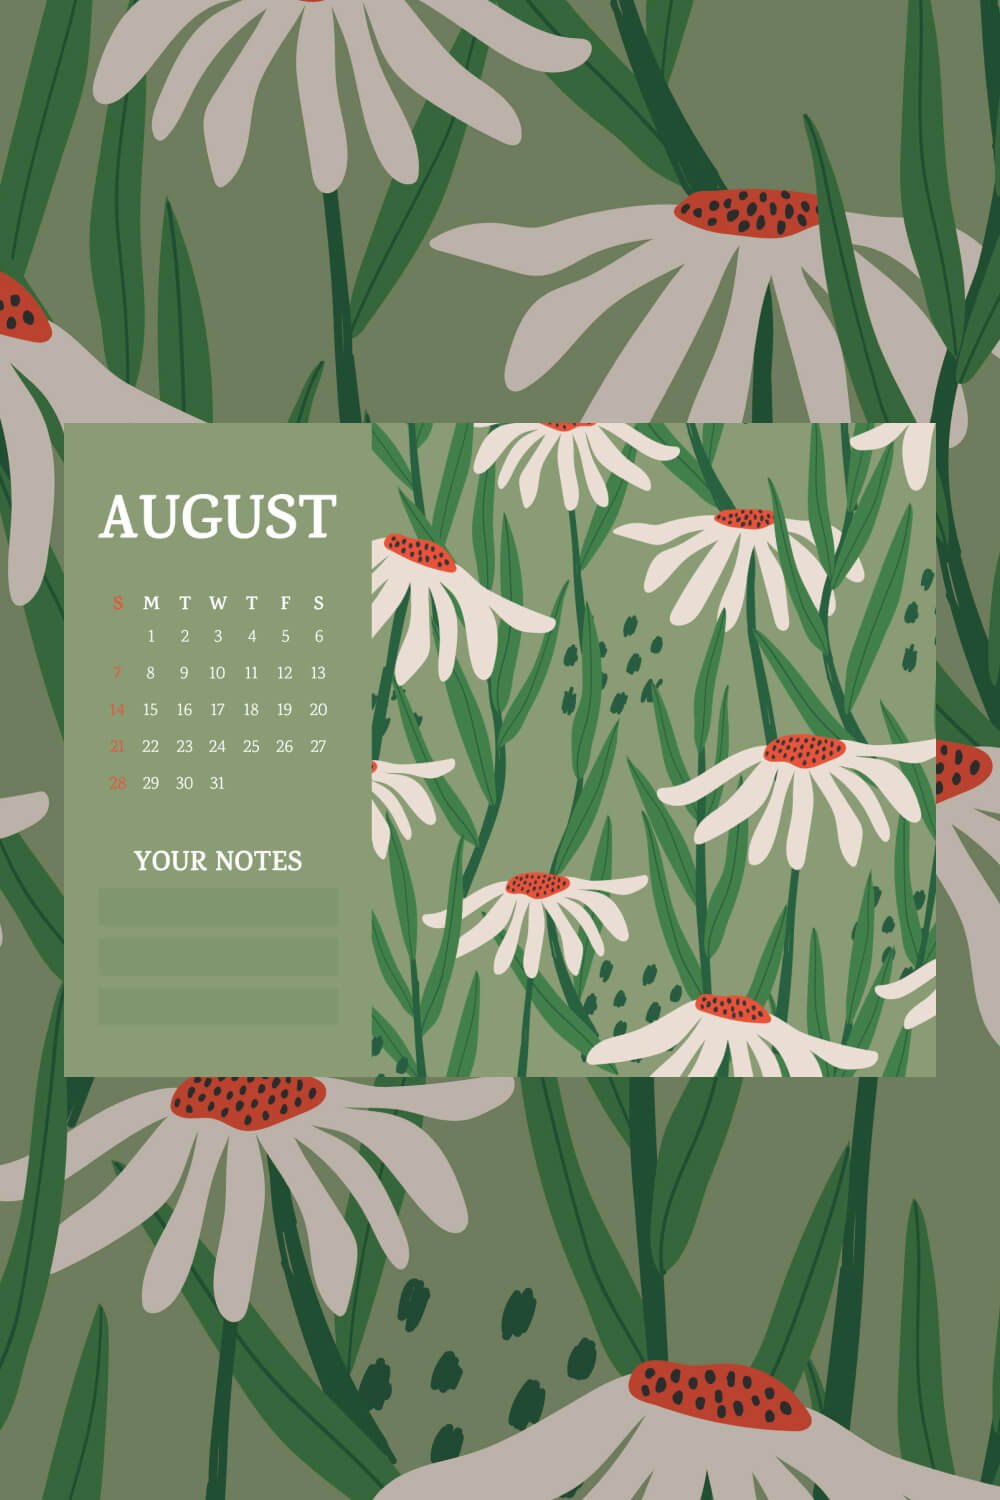 Free Chamomile August Fully Editable Printable Calendar Pinterest image.